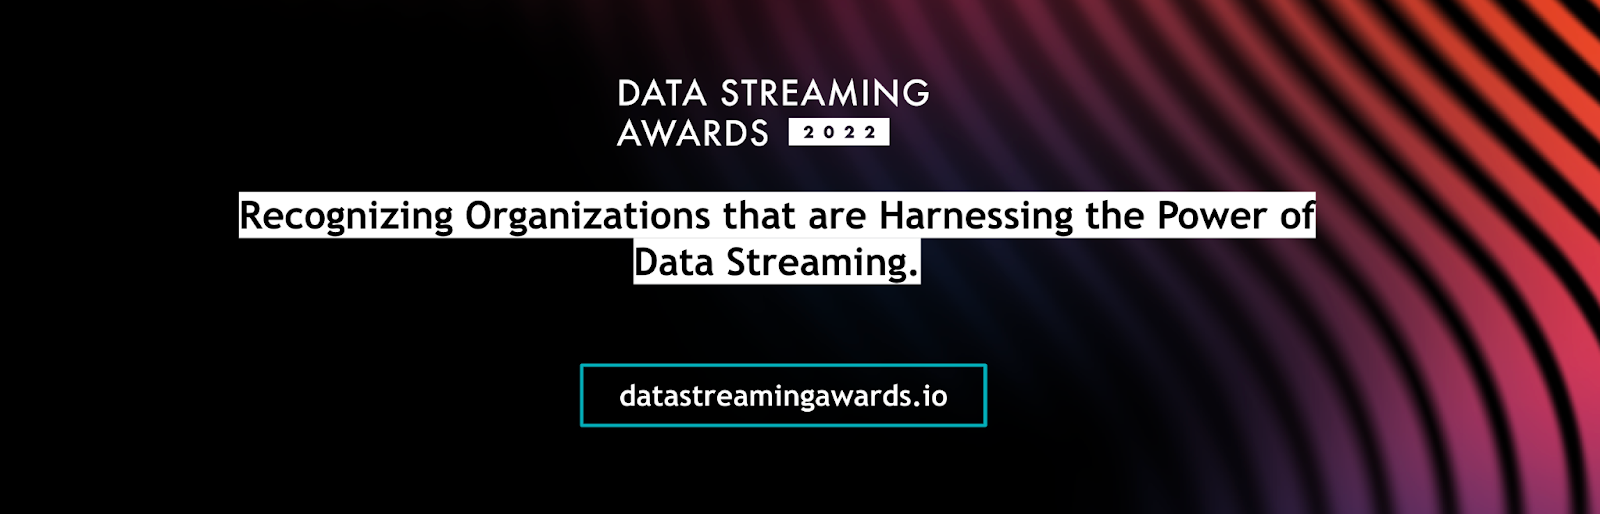 Data Streaming Awards